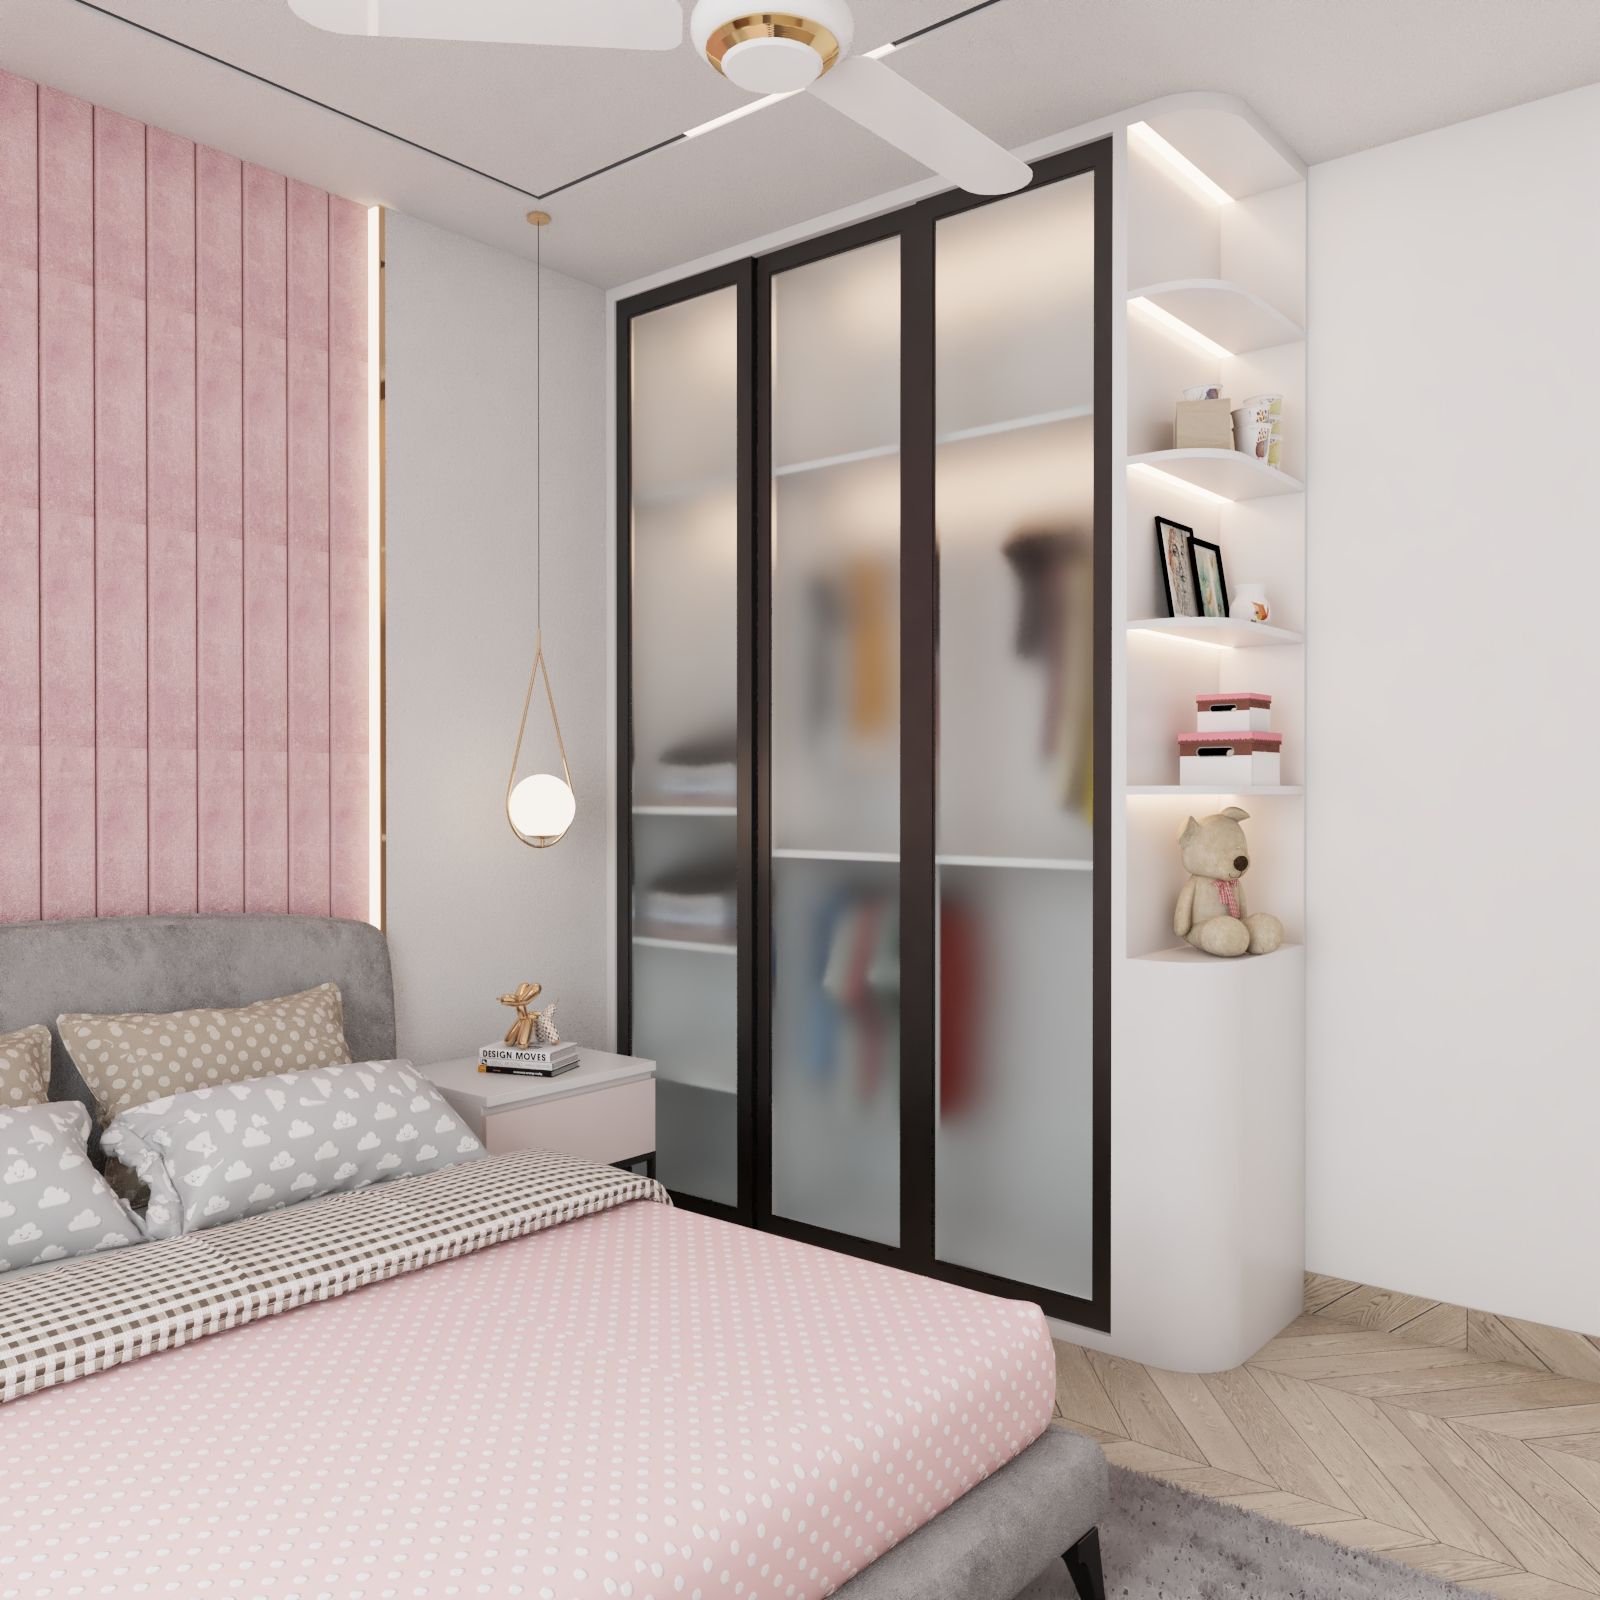 Modern 3-Door Swing Wardrobe Design With Open Glass Cabinets